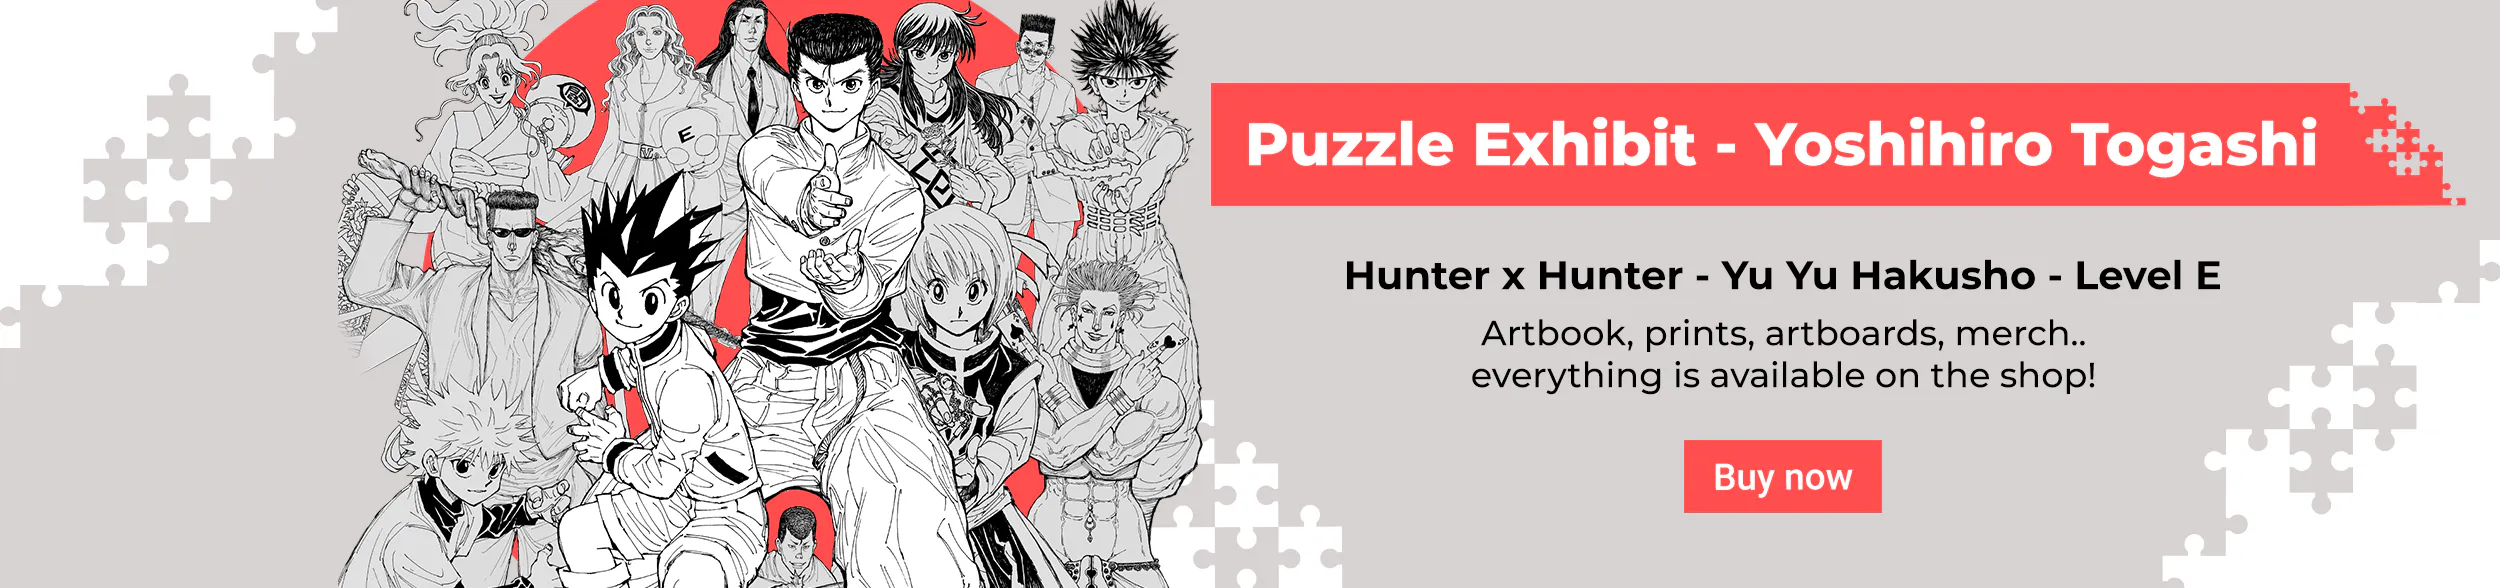 Artbooks, plates, figurines, goodies, manga and official exhibition Hunter x Hunter and Yu Yu Hakusho!